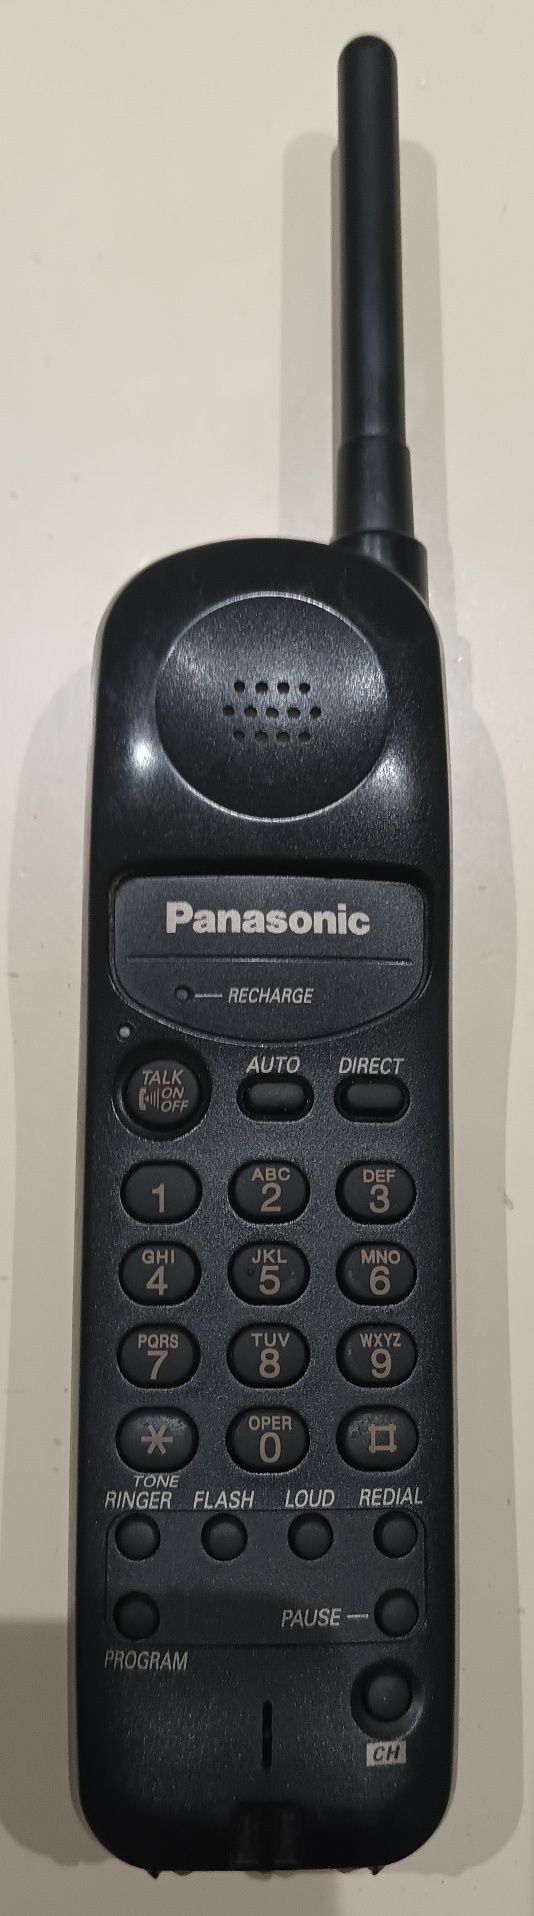 Telefon bezprzewodowy Panasonic.